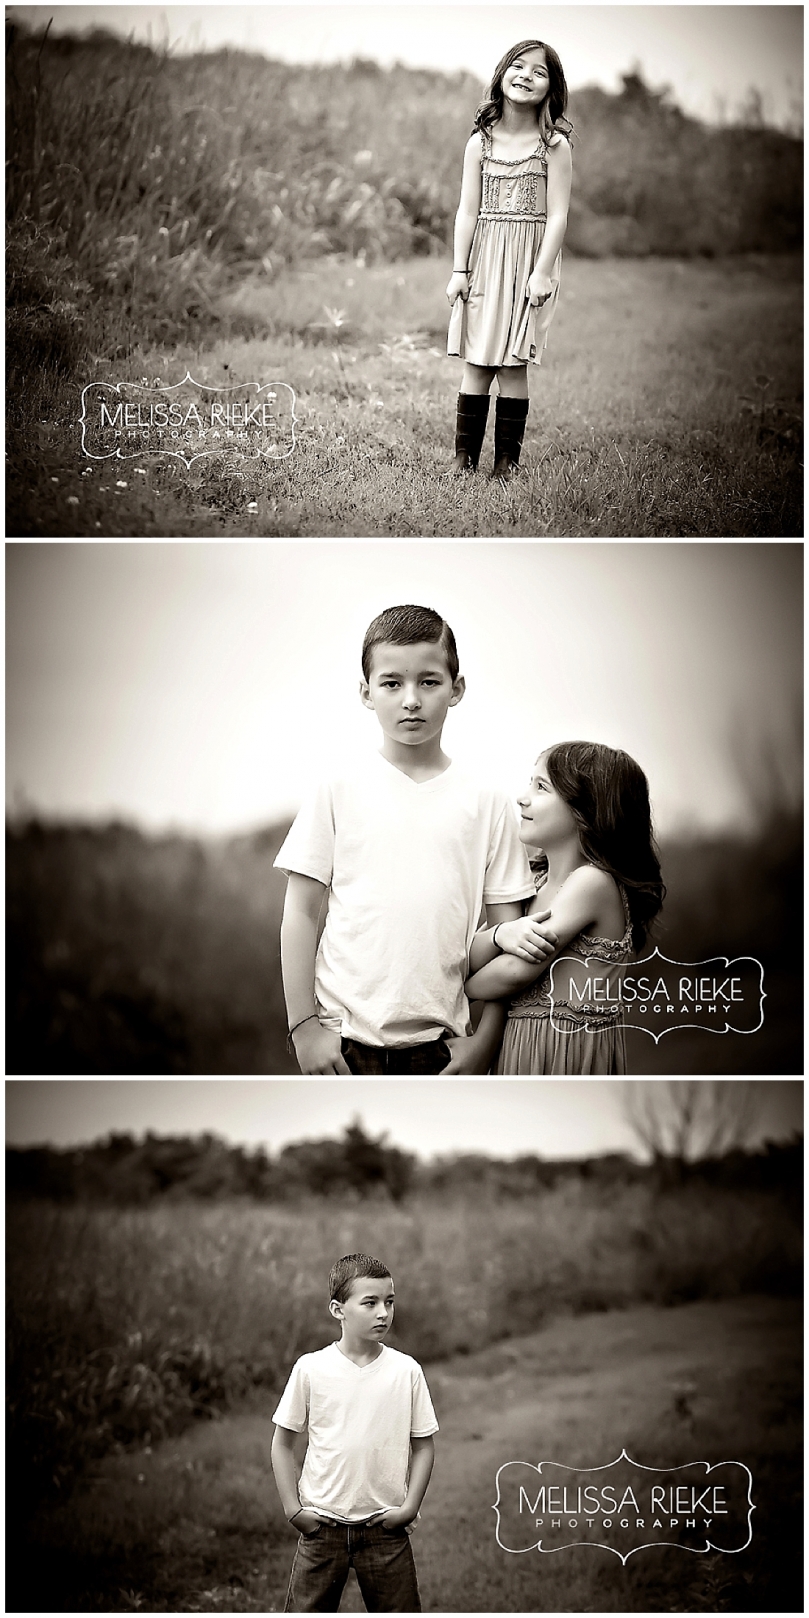 Kansas City Family Photographer | Melissa Rieke Photography www.melissariekephotography.com